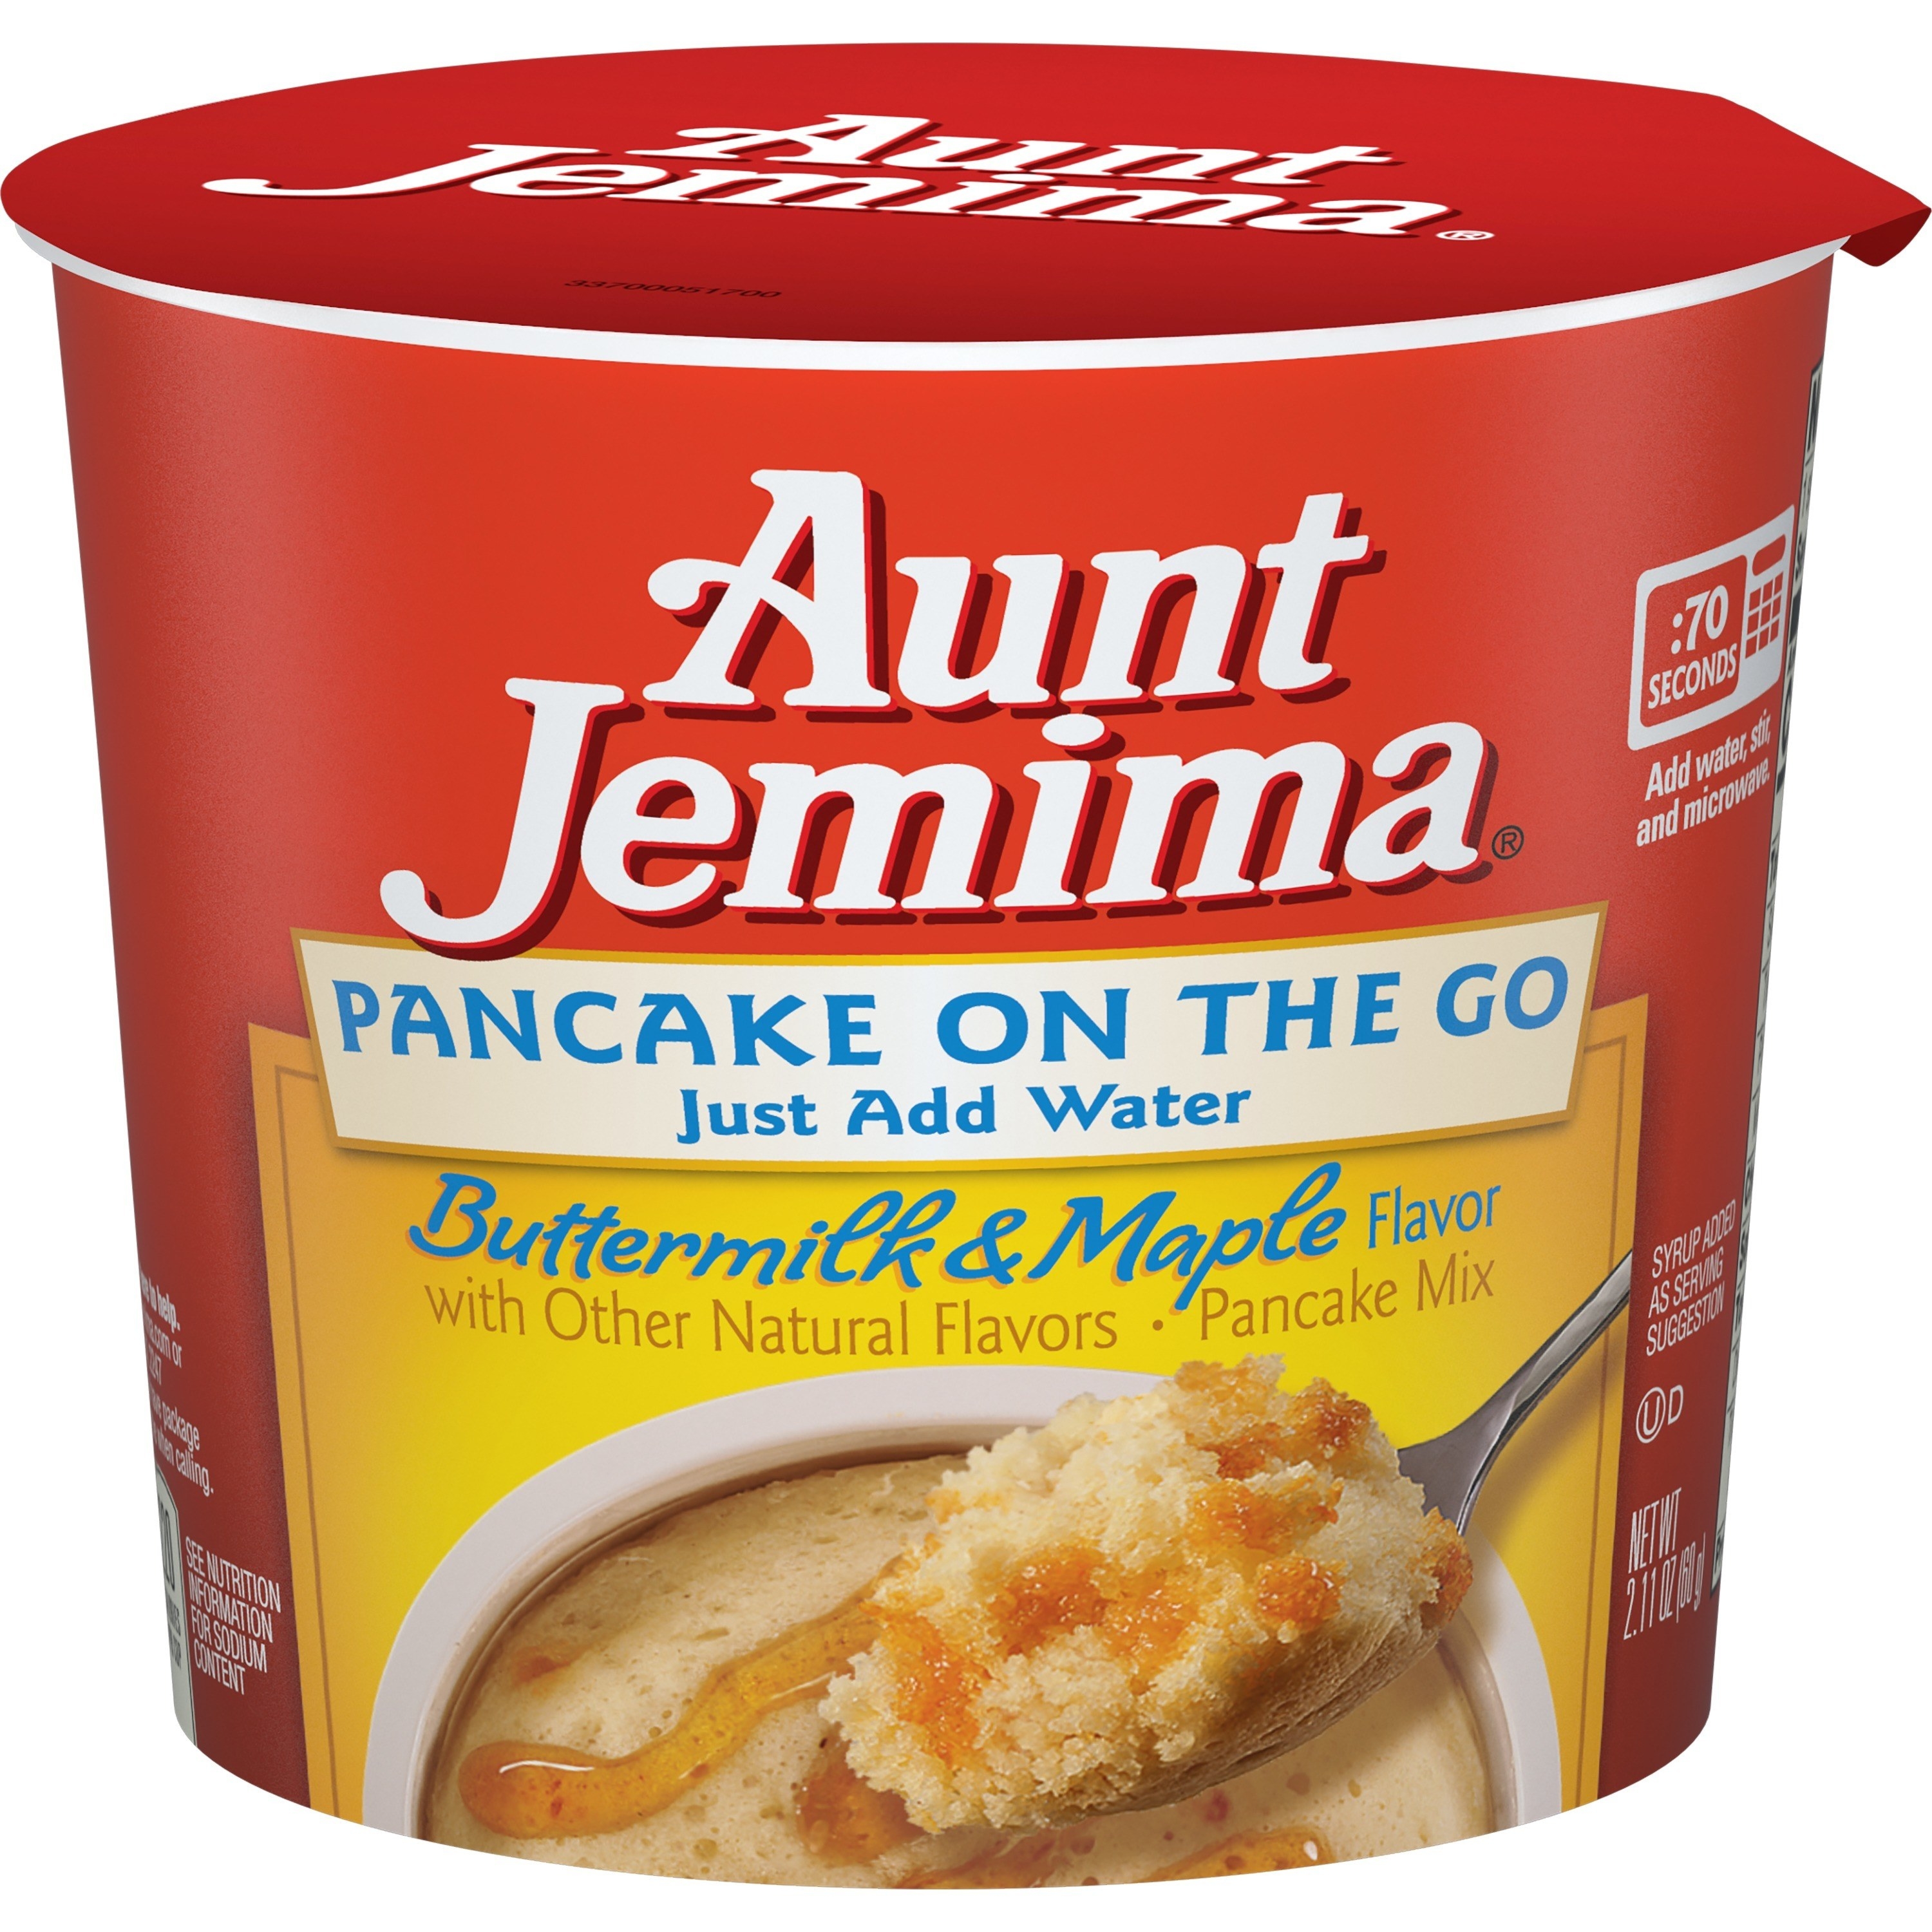 Microwave Aunt Jemima pancake cup 